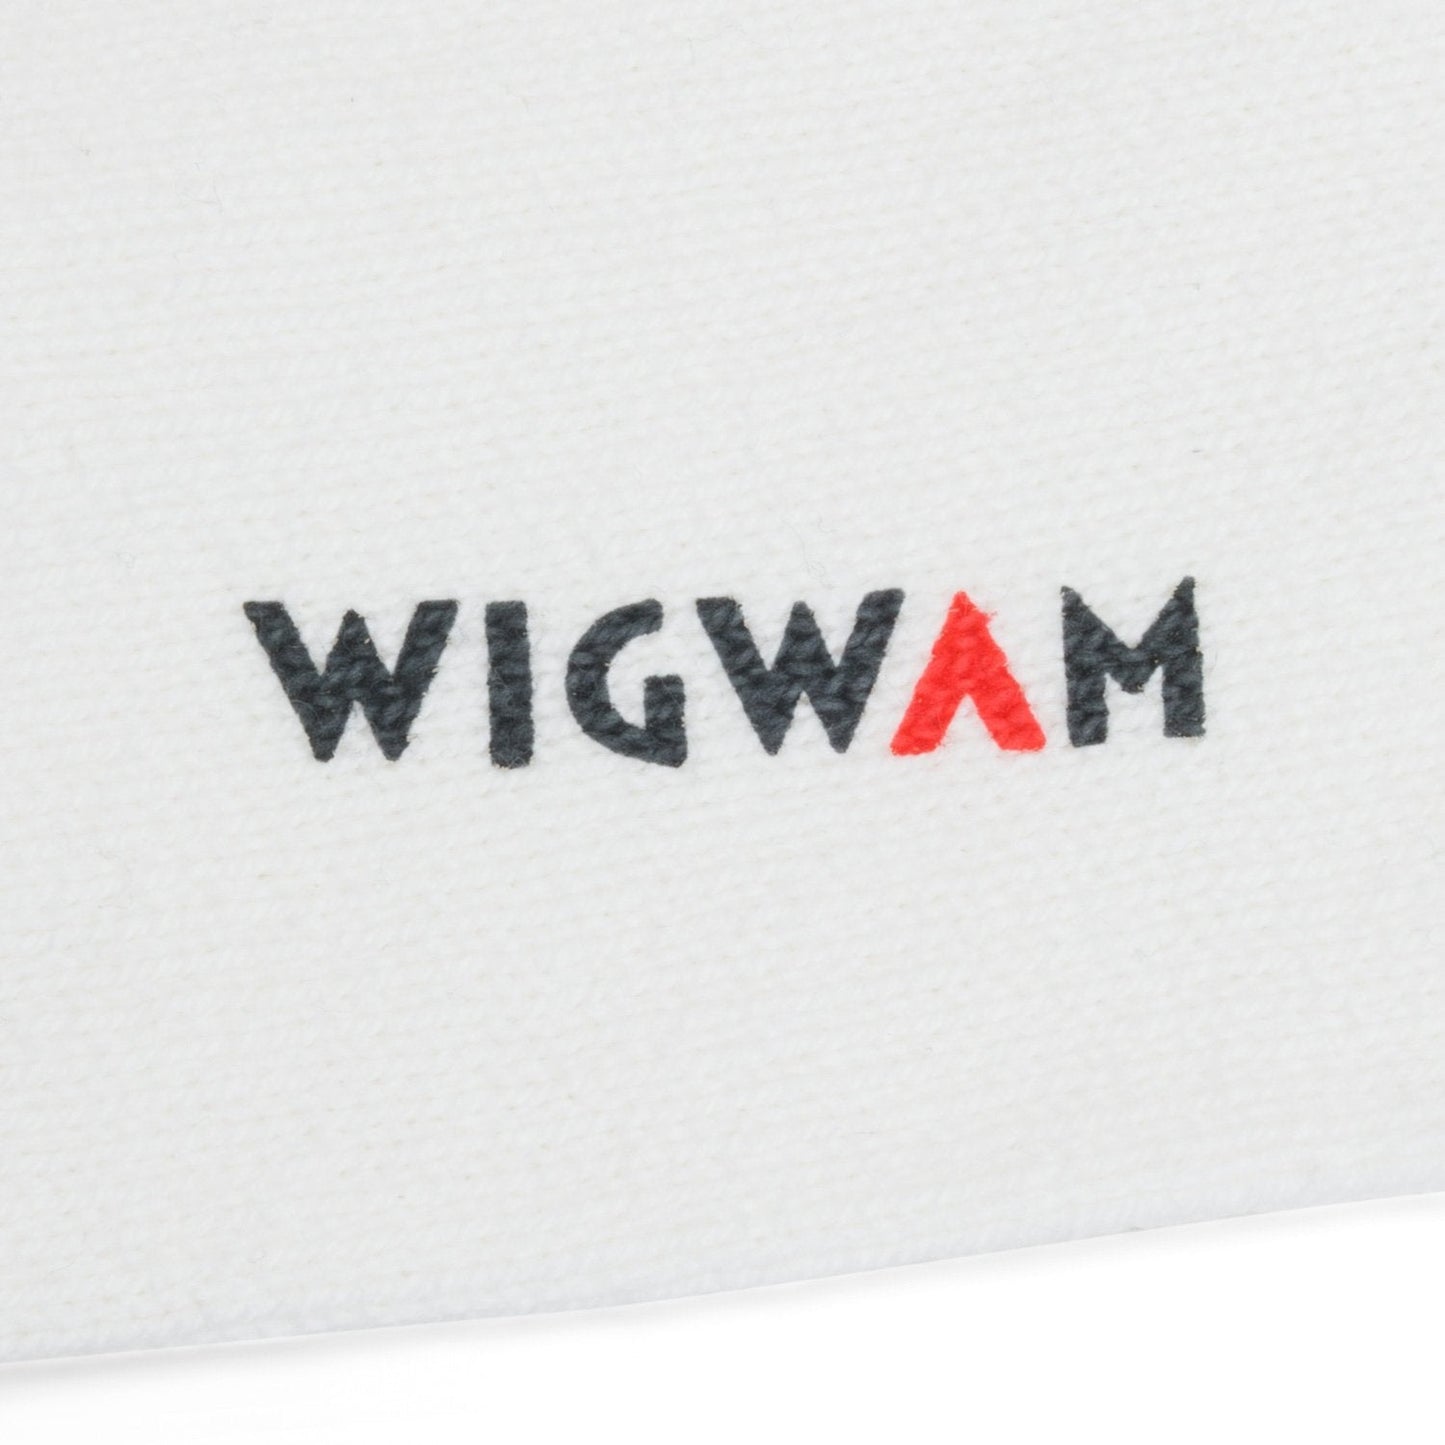 White knit-in logo